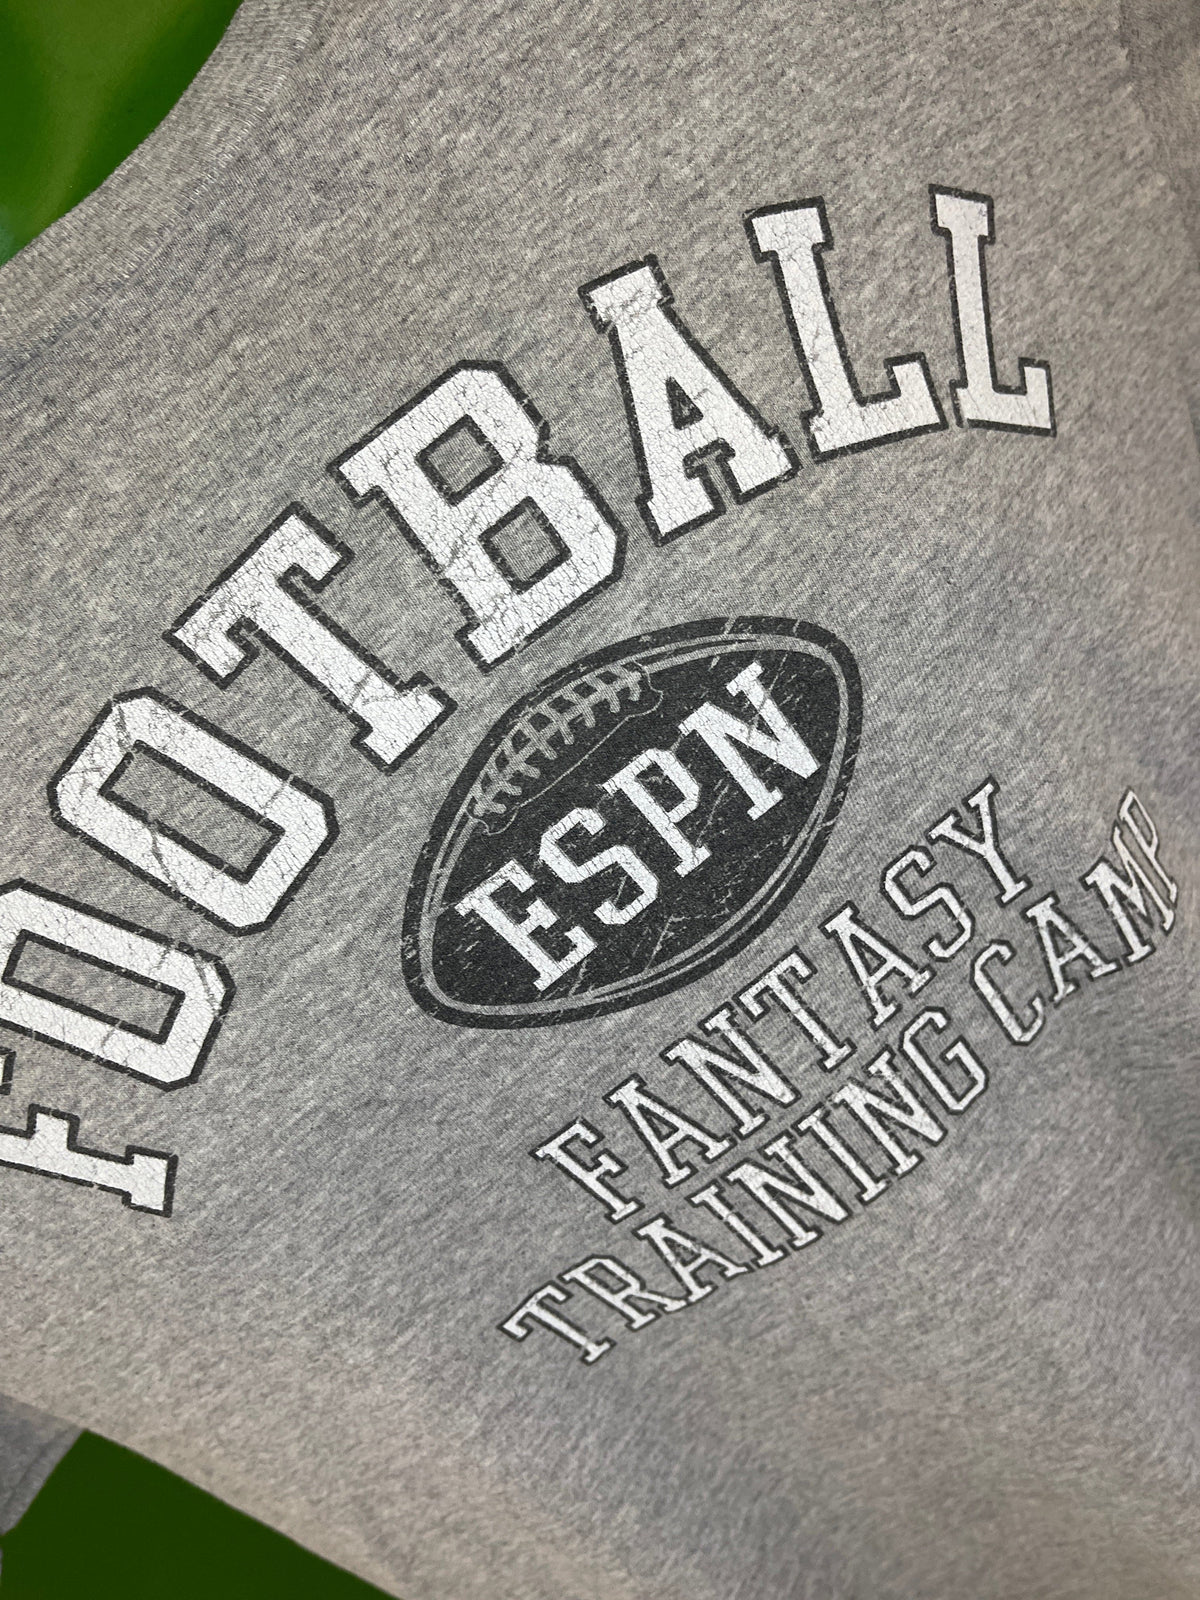 ESPN Sunday Night Football "Fantasy Training Camp" #7 T-Shirt Men's Small